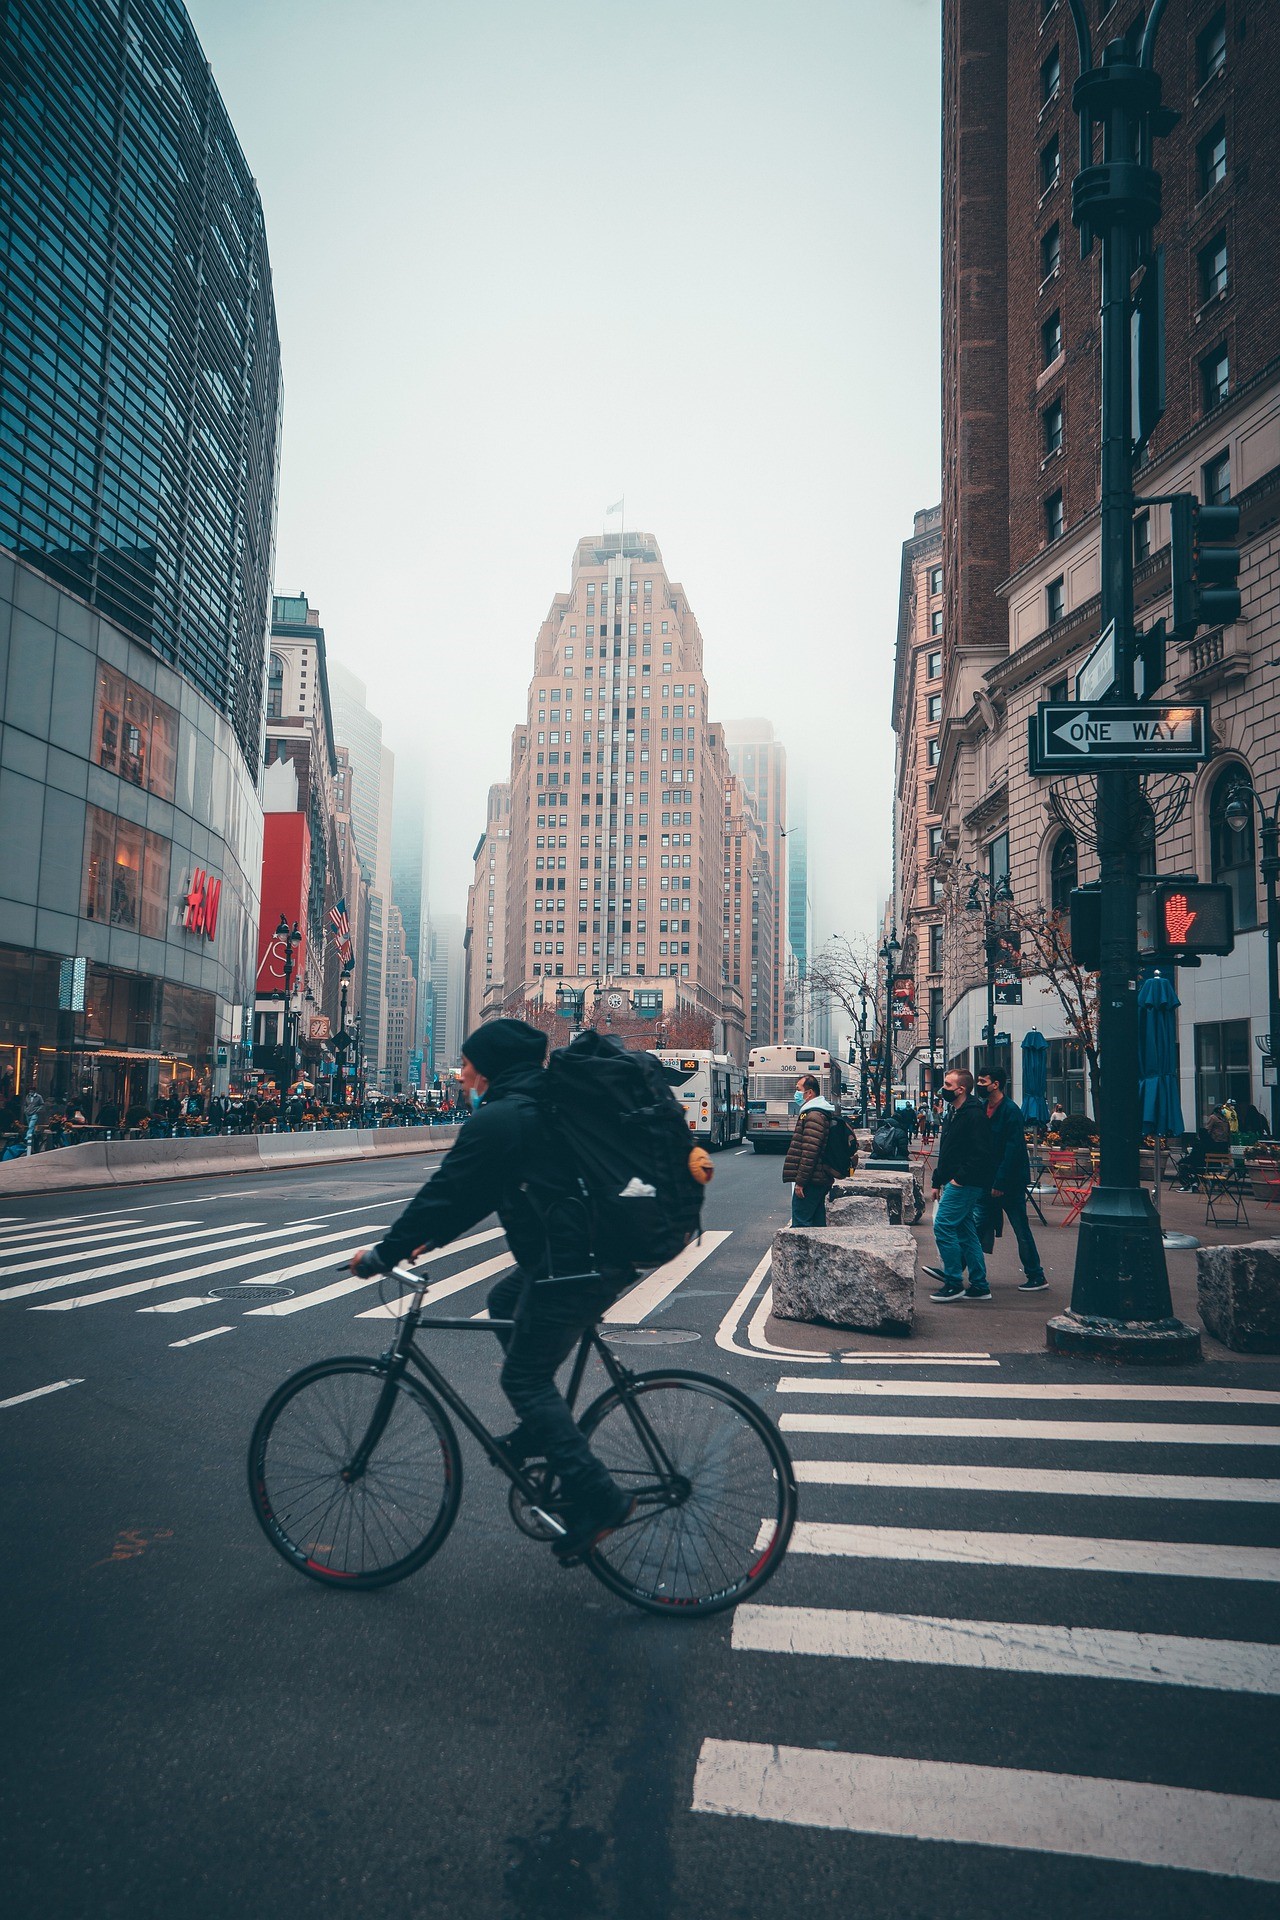 City Center And Bike